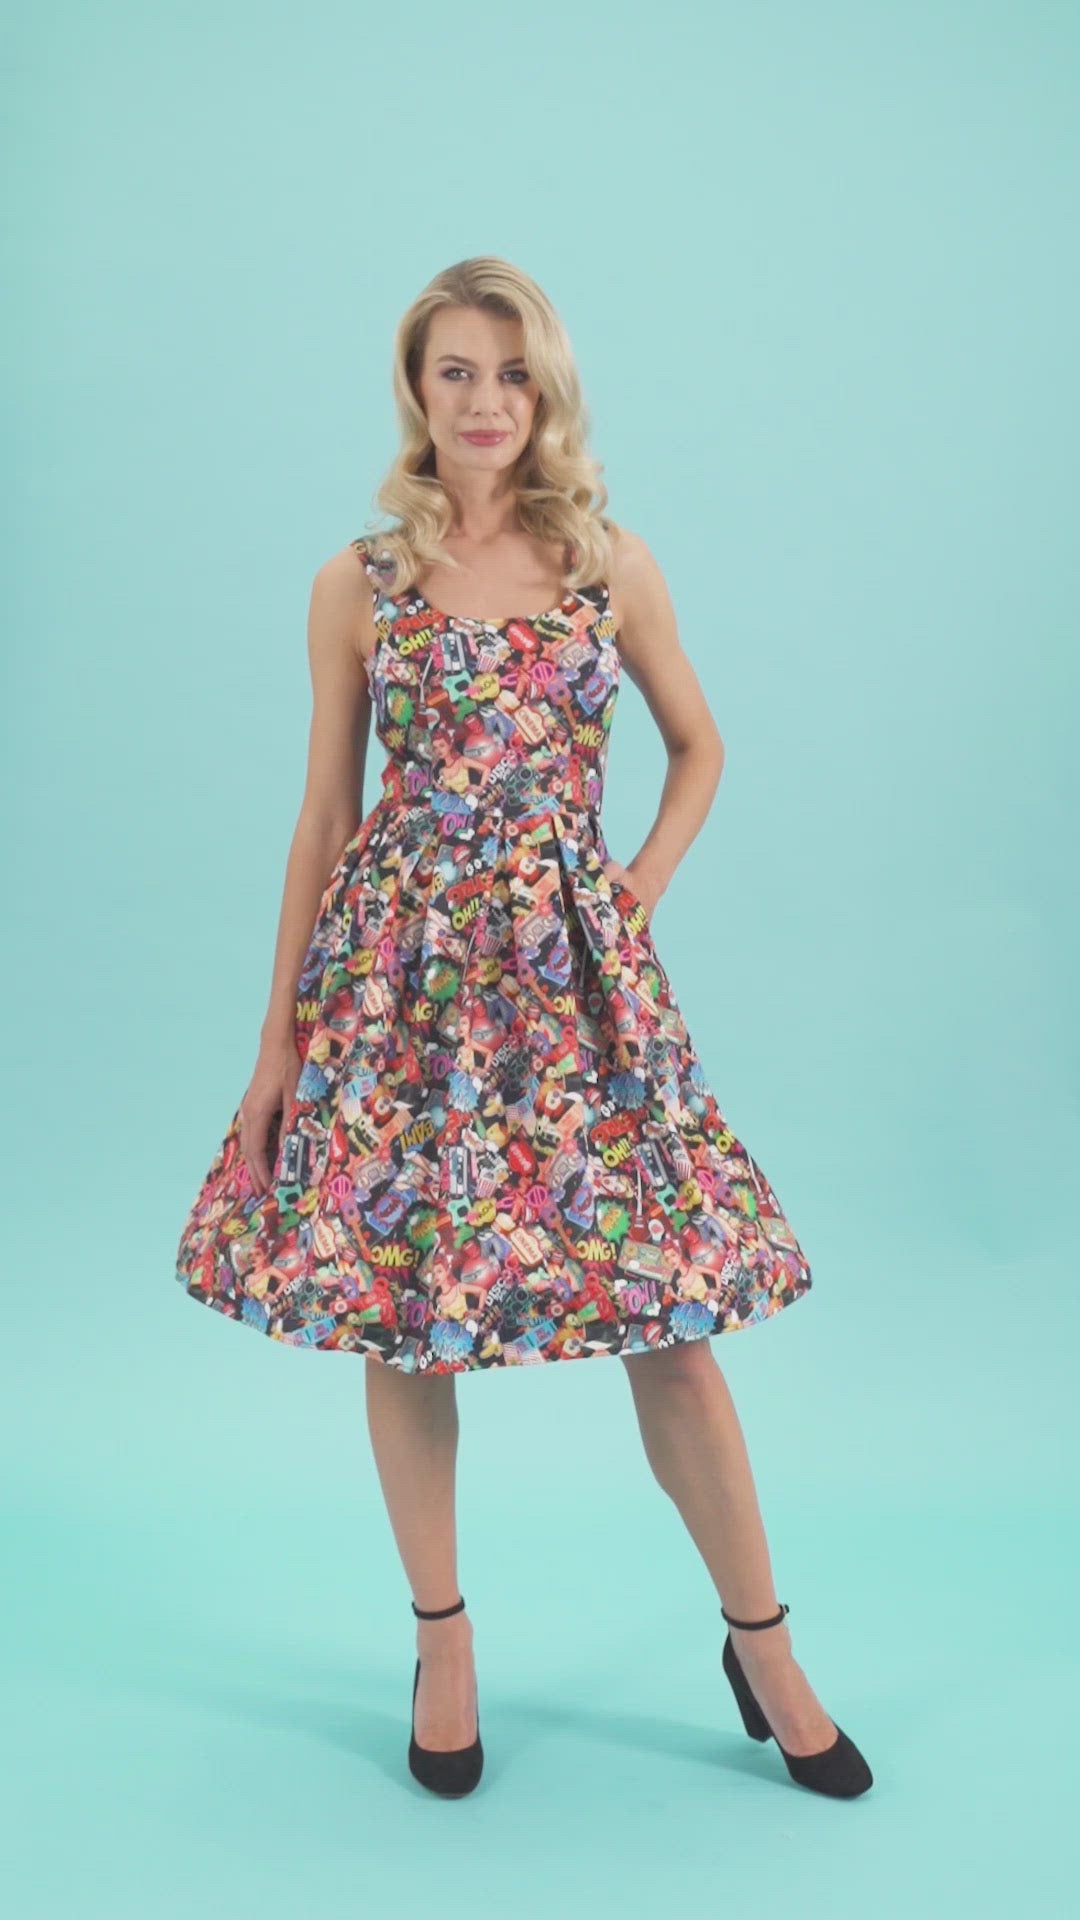 Video of a model twirling, wearing a Sleeveless Swing Dress with  Pop Art Print